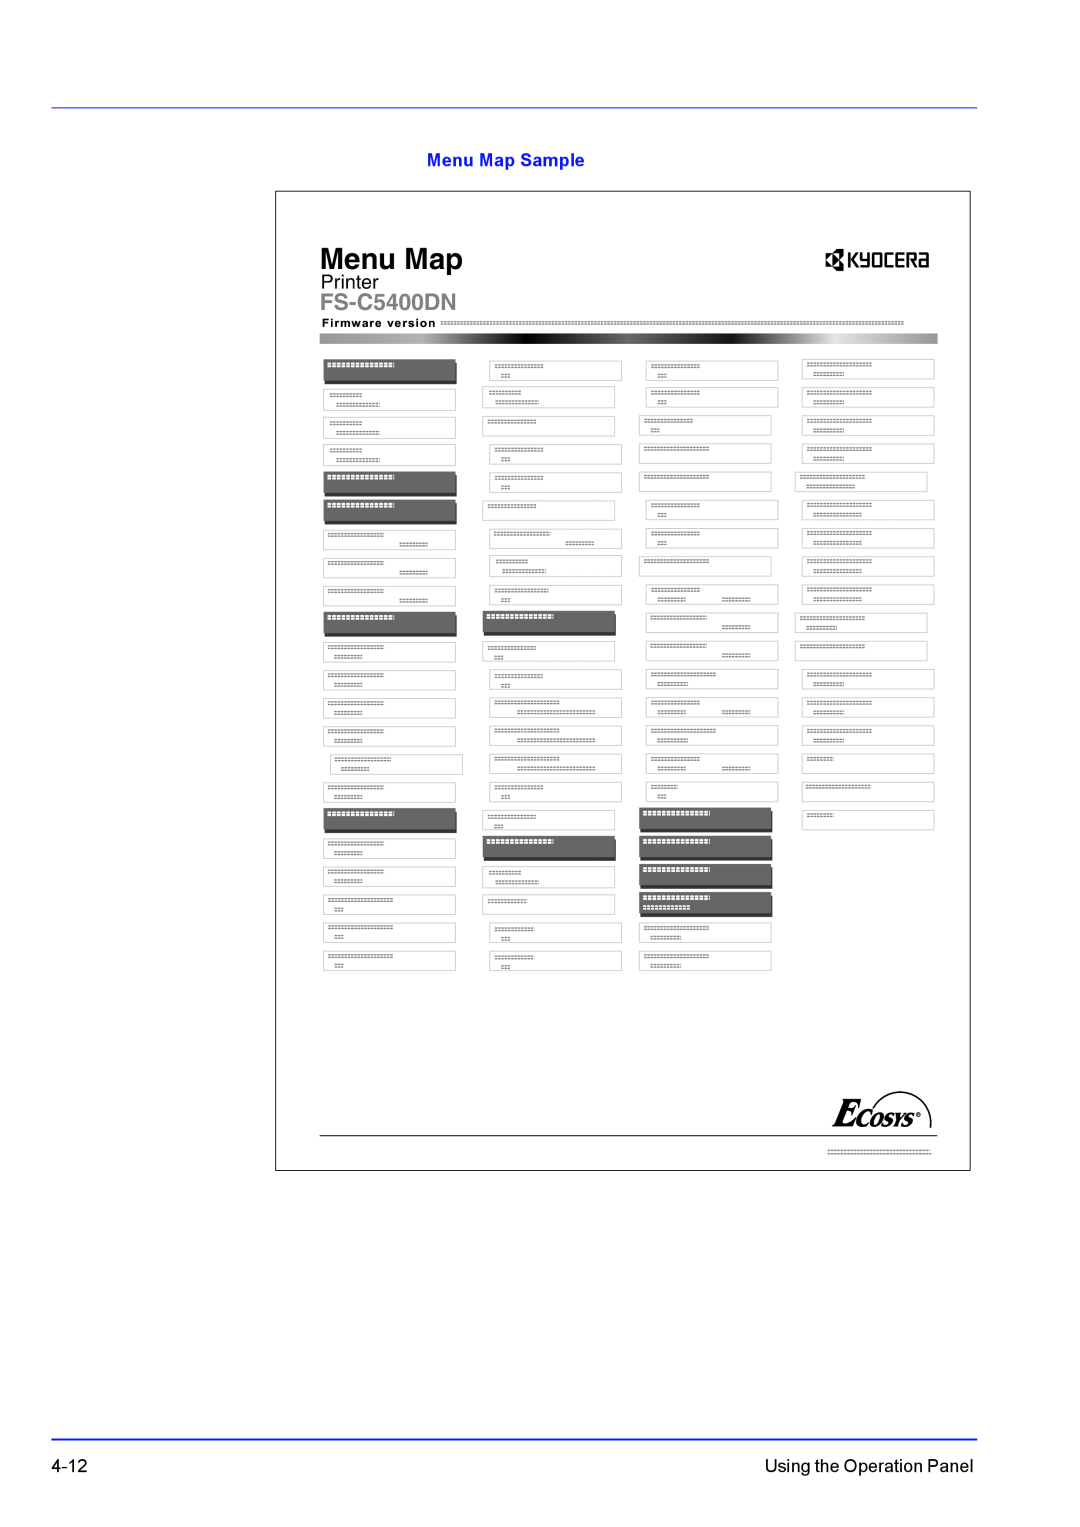 Kyocera FS-1300D, FS-1100 manual FS-C5400DN, Printer, Menu Map Sample, Firmware version 